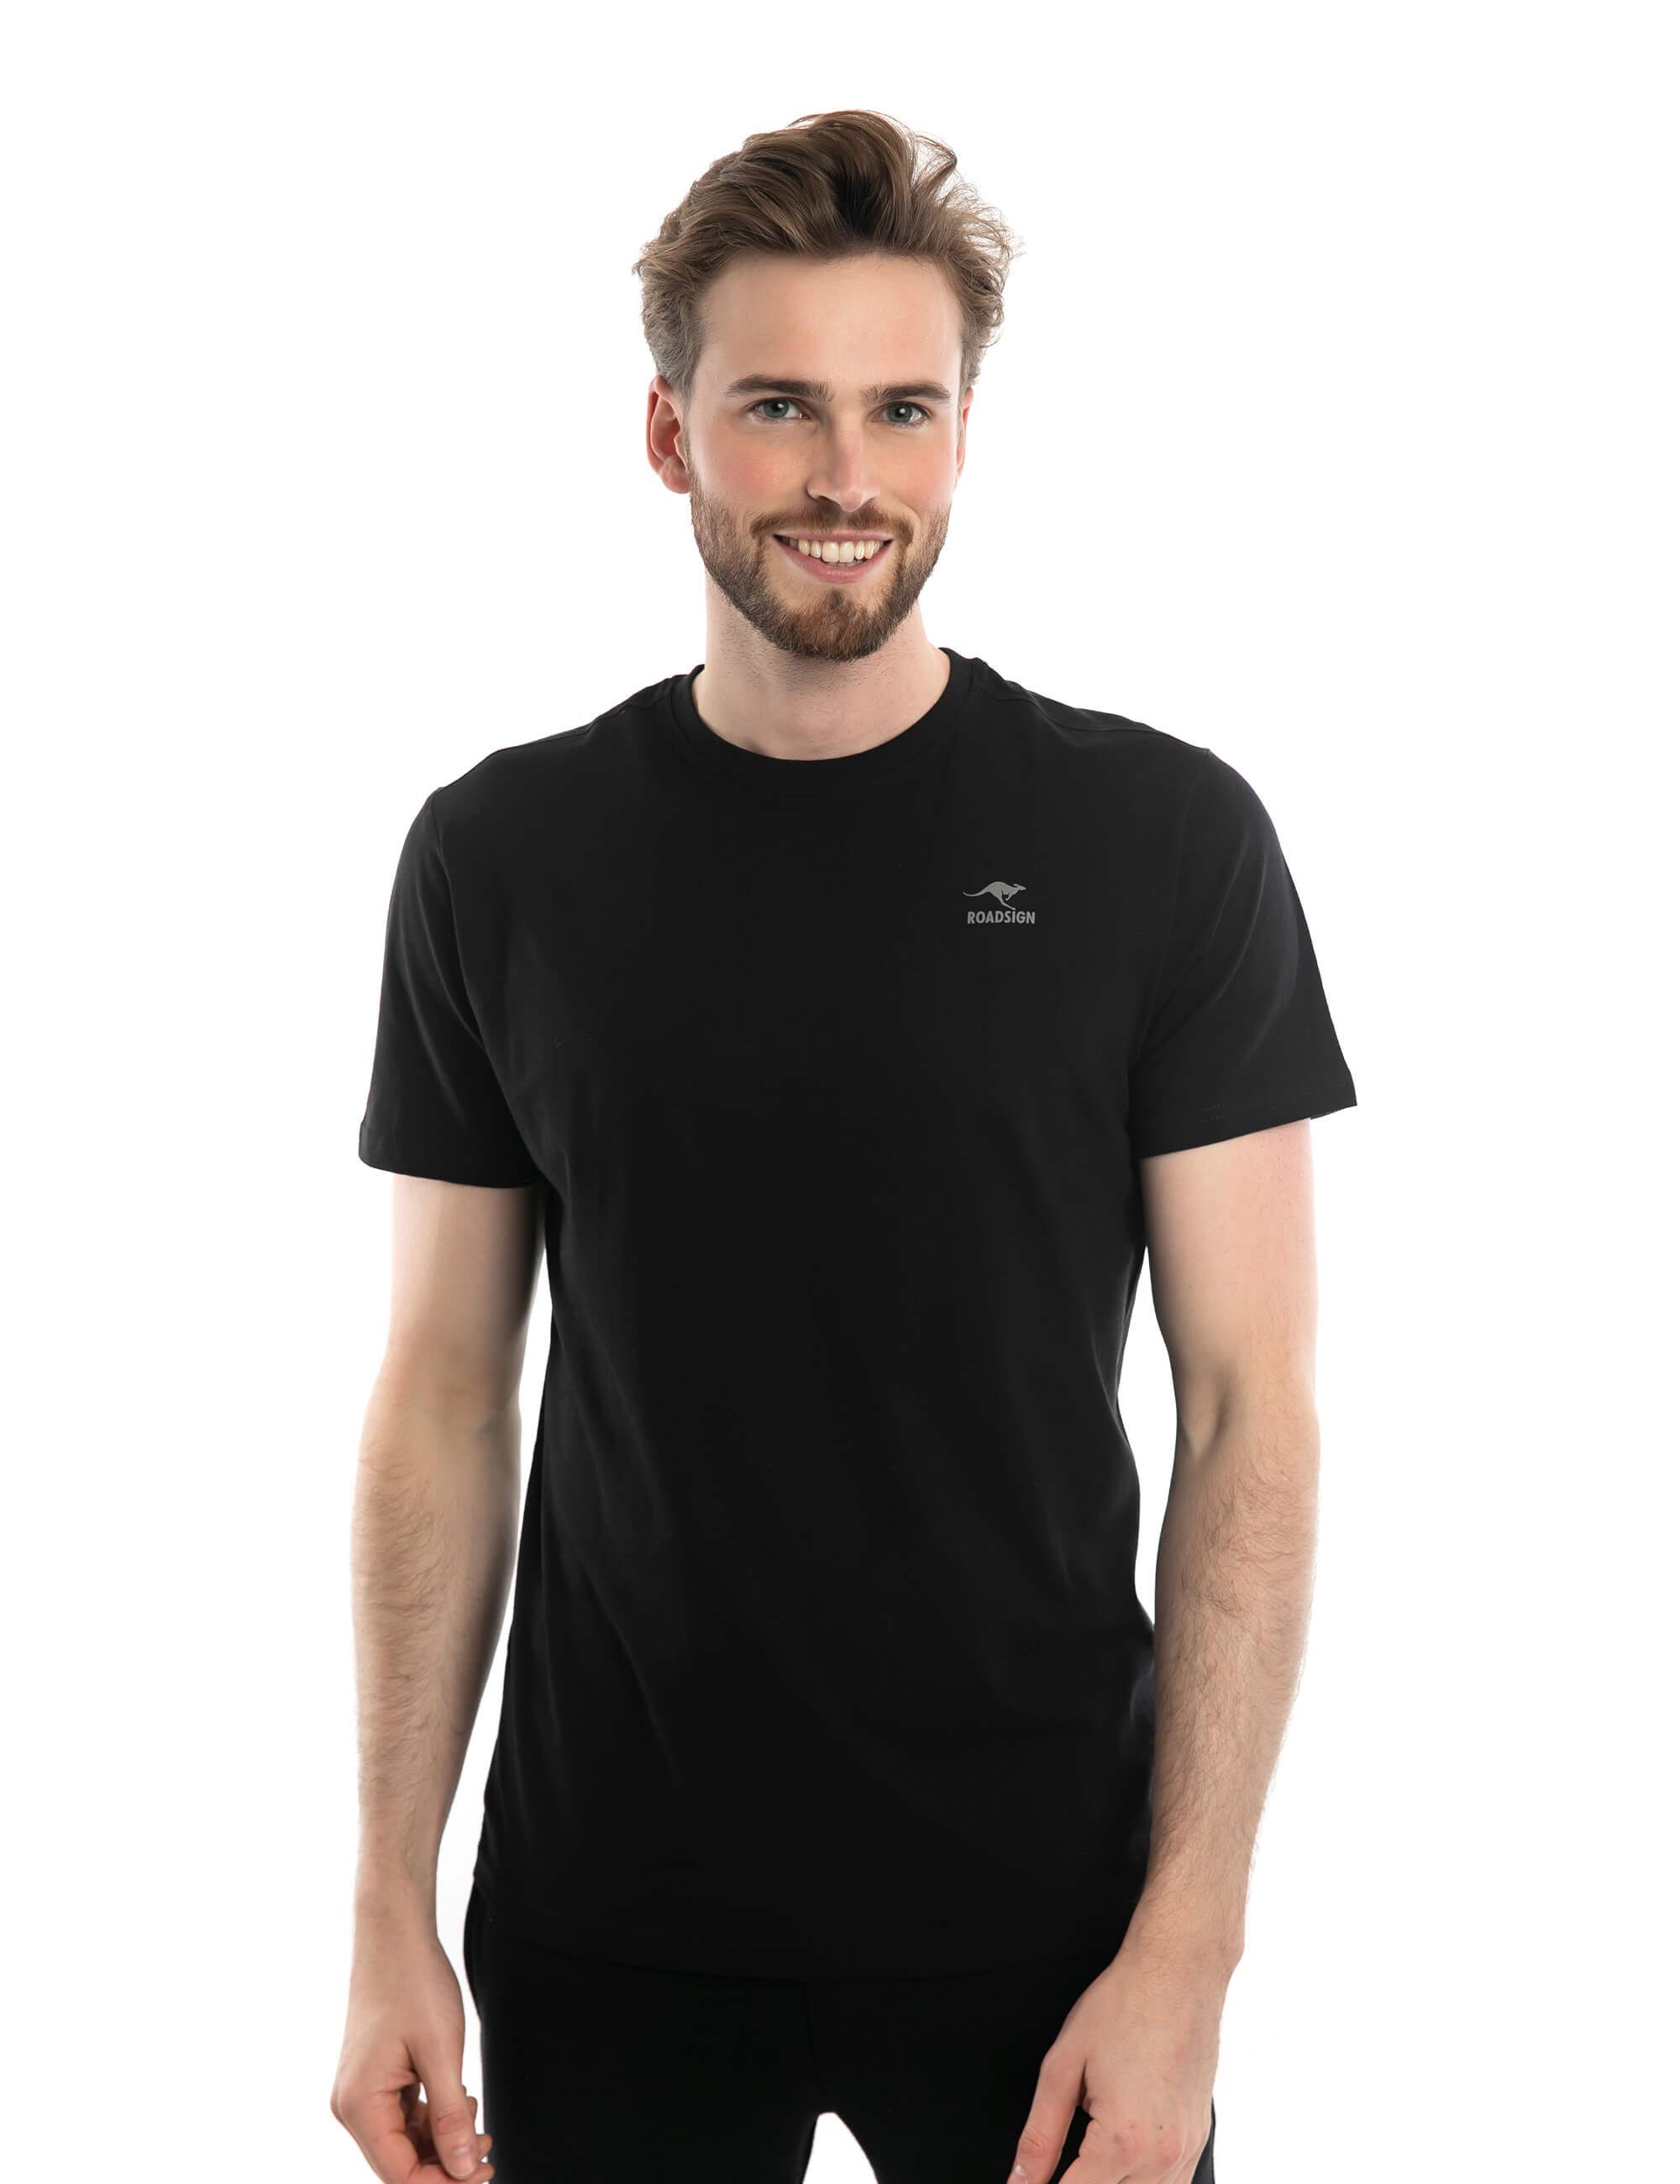 ROADSIGN australia T-Shirt Basic (Doppelpack, 2-tlg., 2er-Pack) mit Rundhalsausschnitt, 100 % Baumwolle (2-er Pack) schwarz